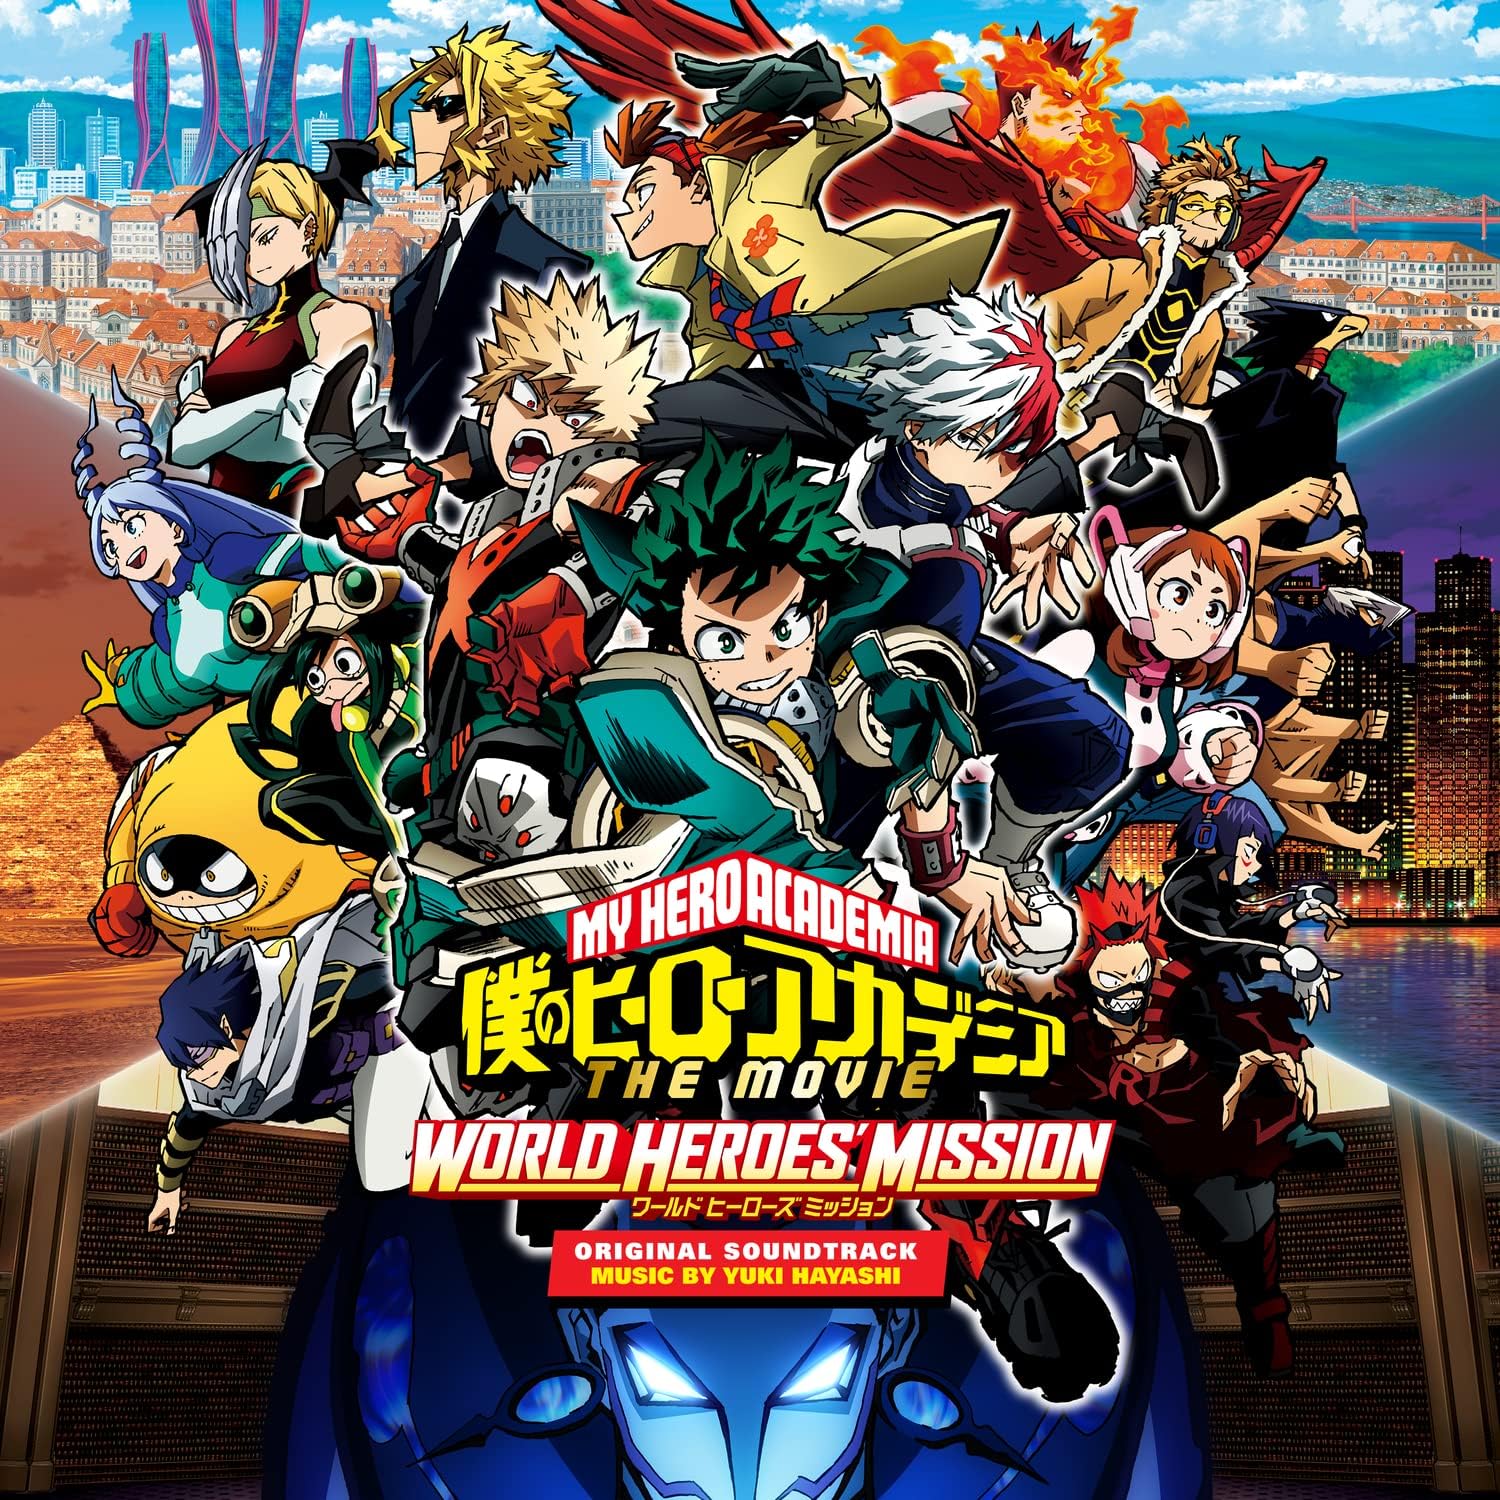 (ANIMATION MUSIC) / (アニメーション音楽) / MY HERO ACADEMIA: WORLD HEROES' MISSION (ORIGINAL SOUNDTRACK) / MY HERO ACADEMIA: WORLD HEROES' MISSION (ORIGINAL SOUNDTRACK)